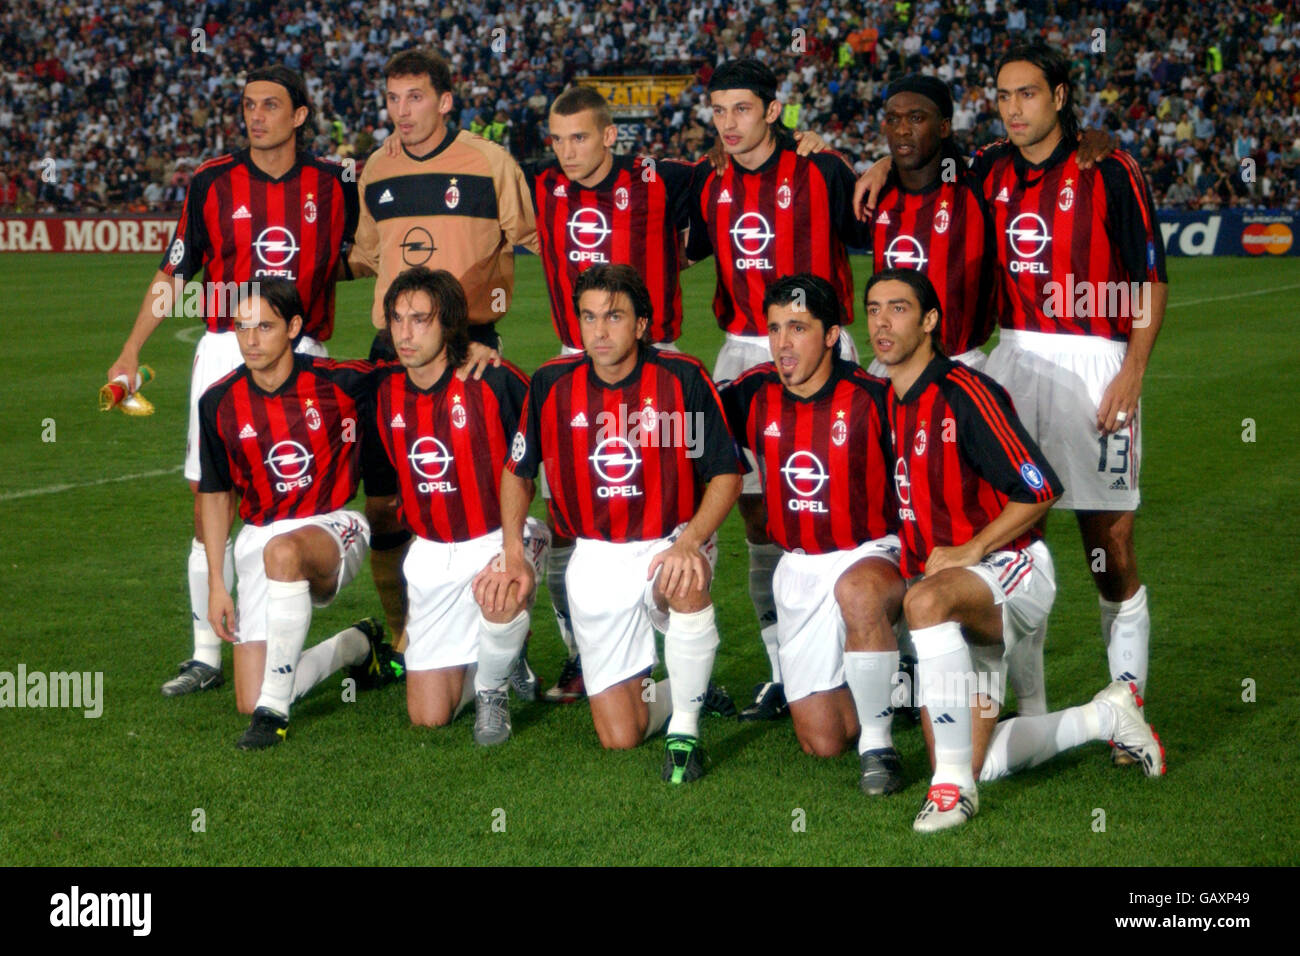 Calcio - UEFA Champions League - Semifinale - seconda tappa - Inter Milan v  AC Milan. Gruppo del team AC Milan Foto stock - Alamy